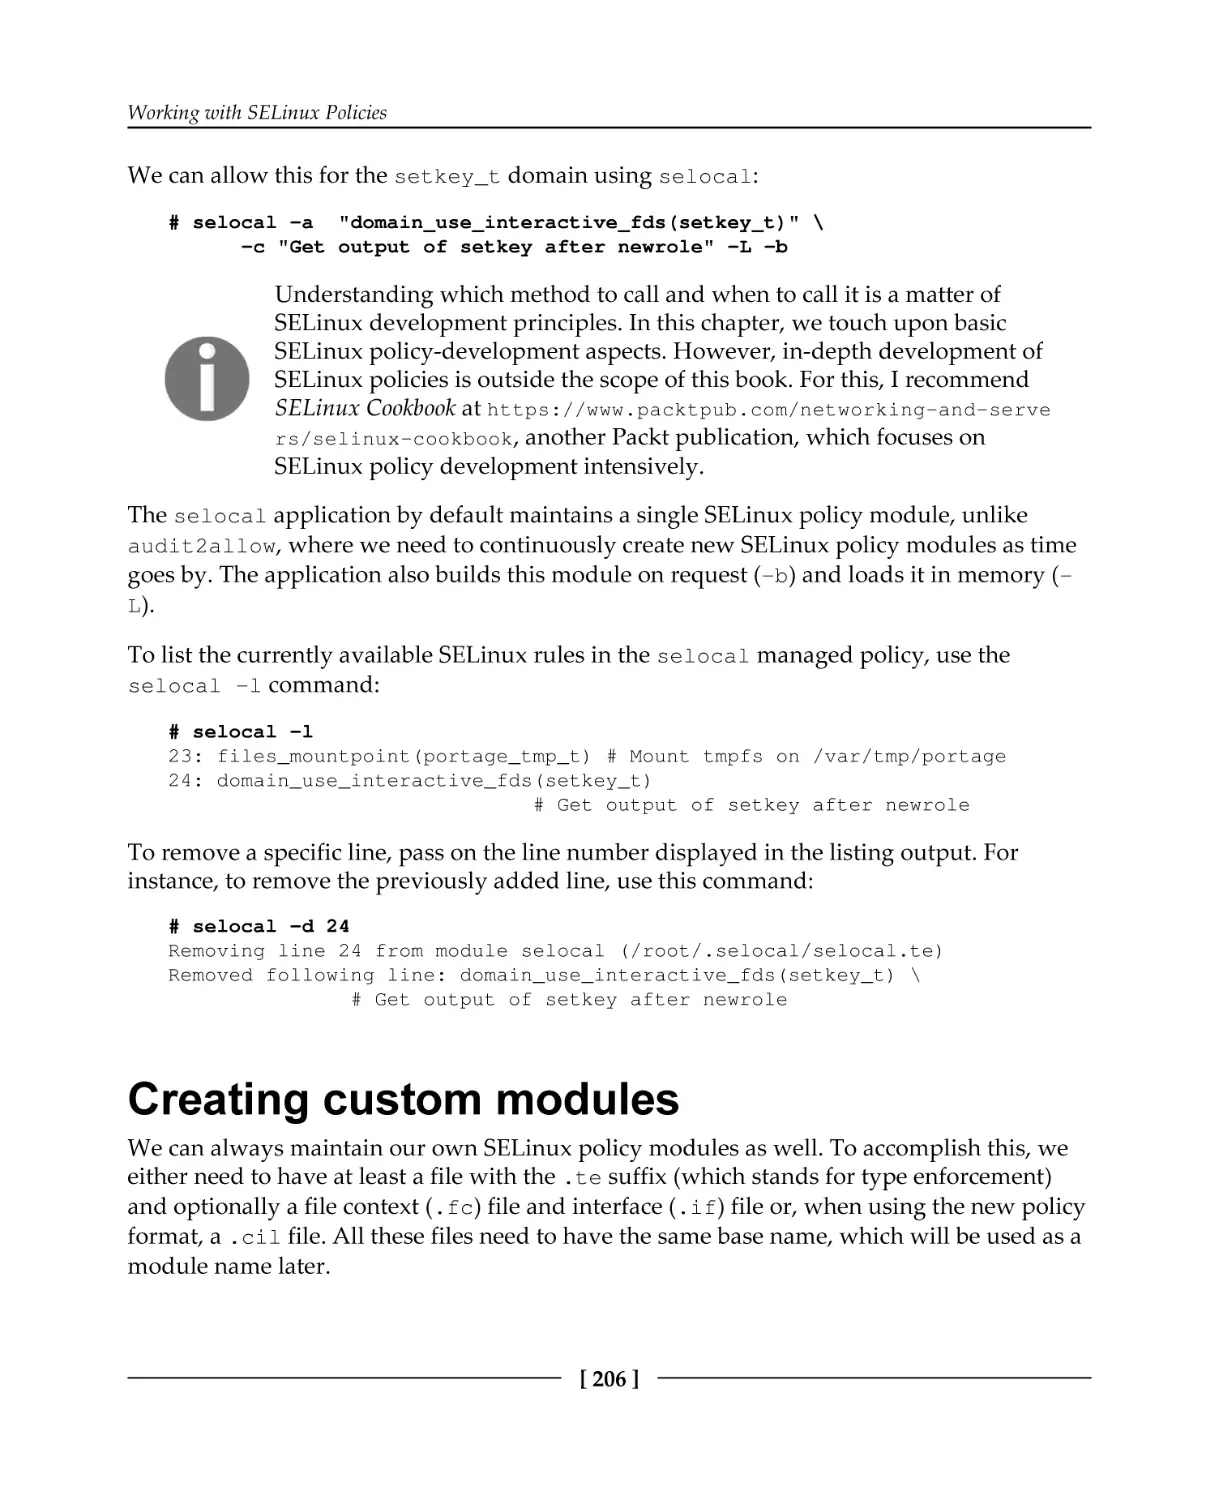 Creating custom modules